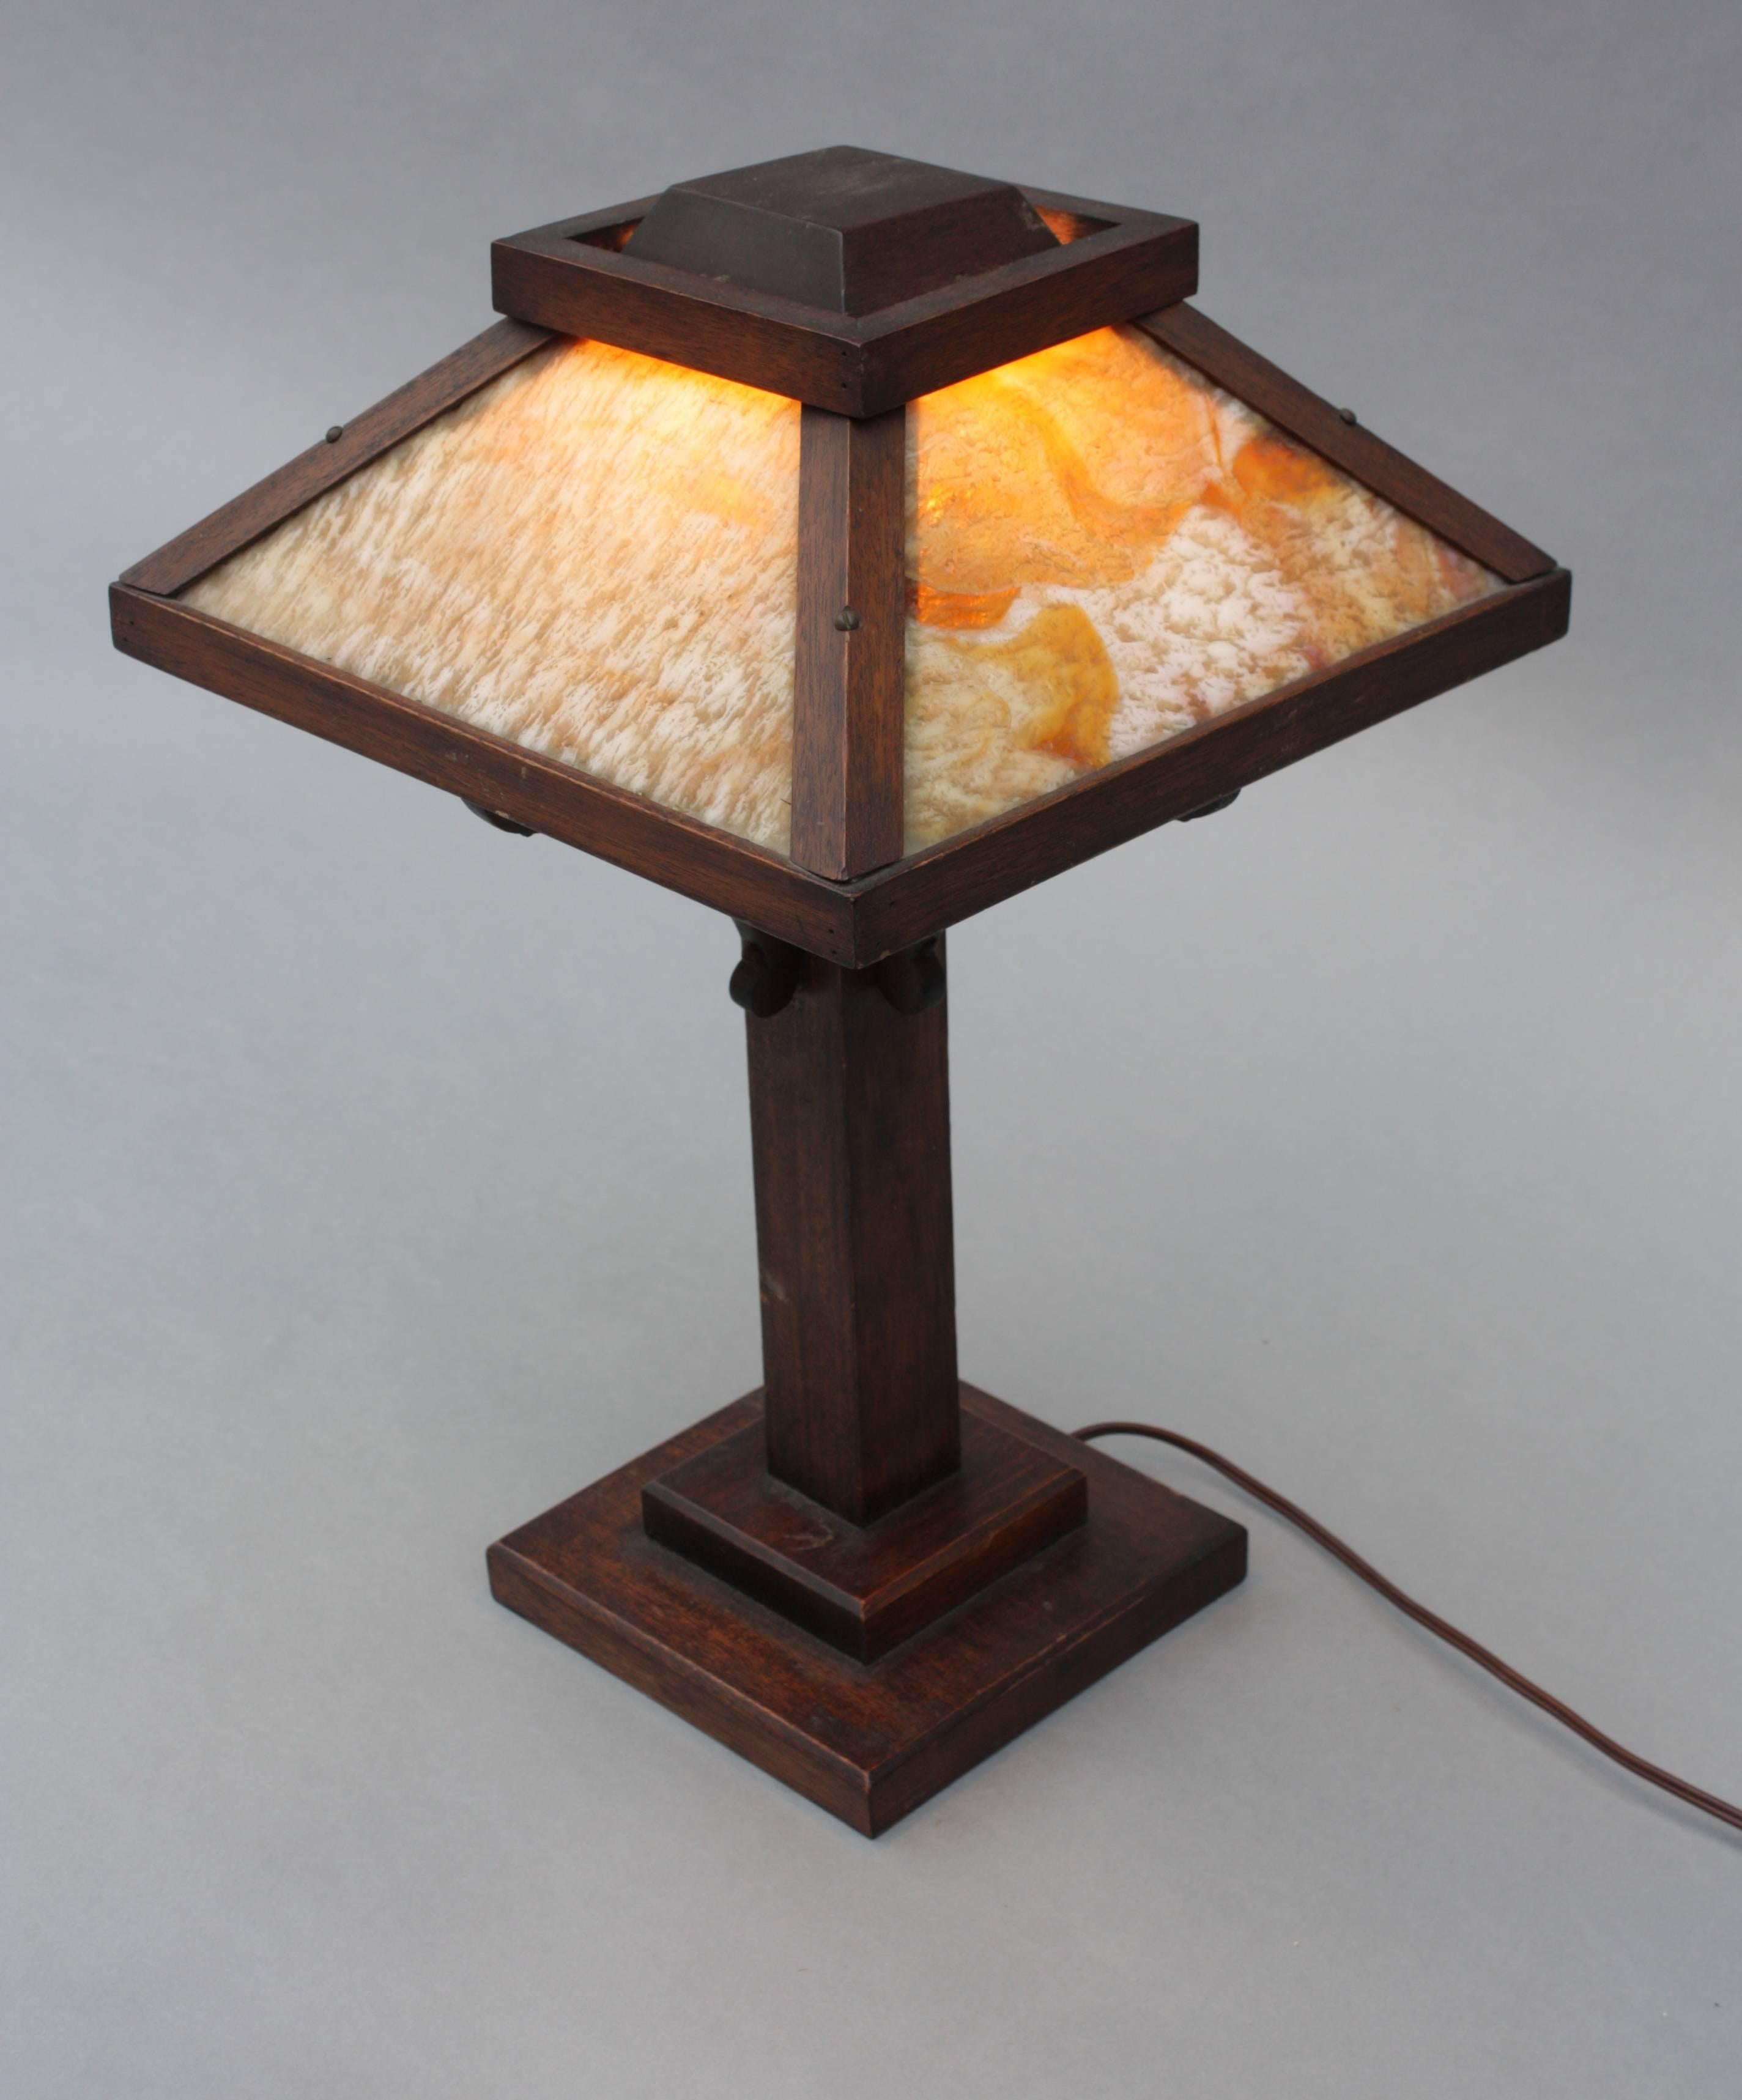 Table lamp with caramel slag glass and oak base, circa 1910.